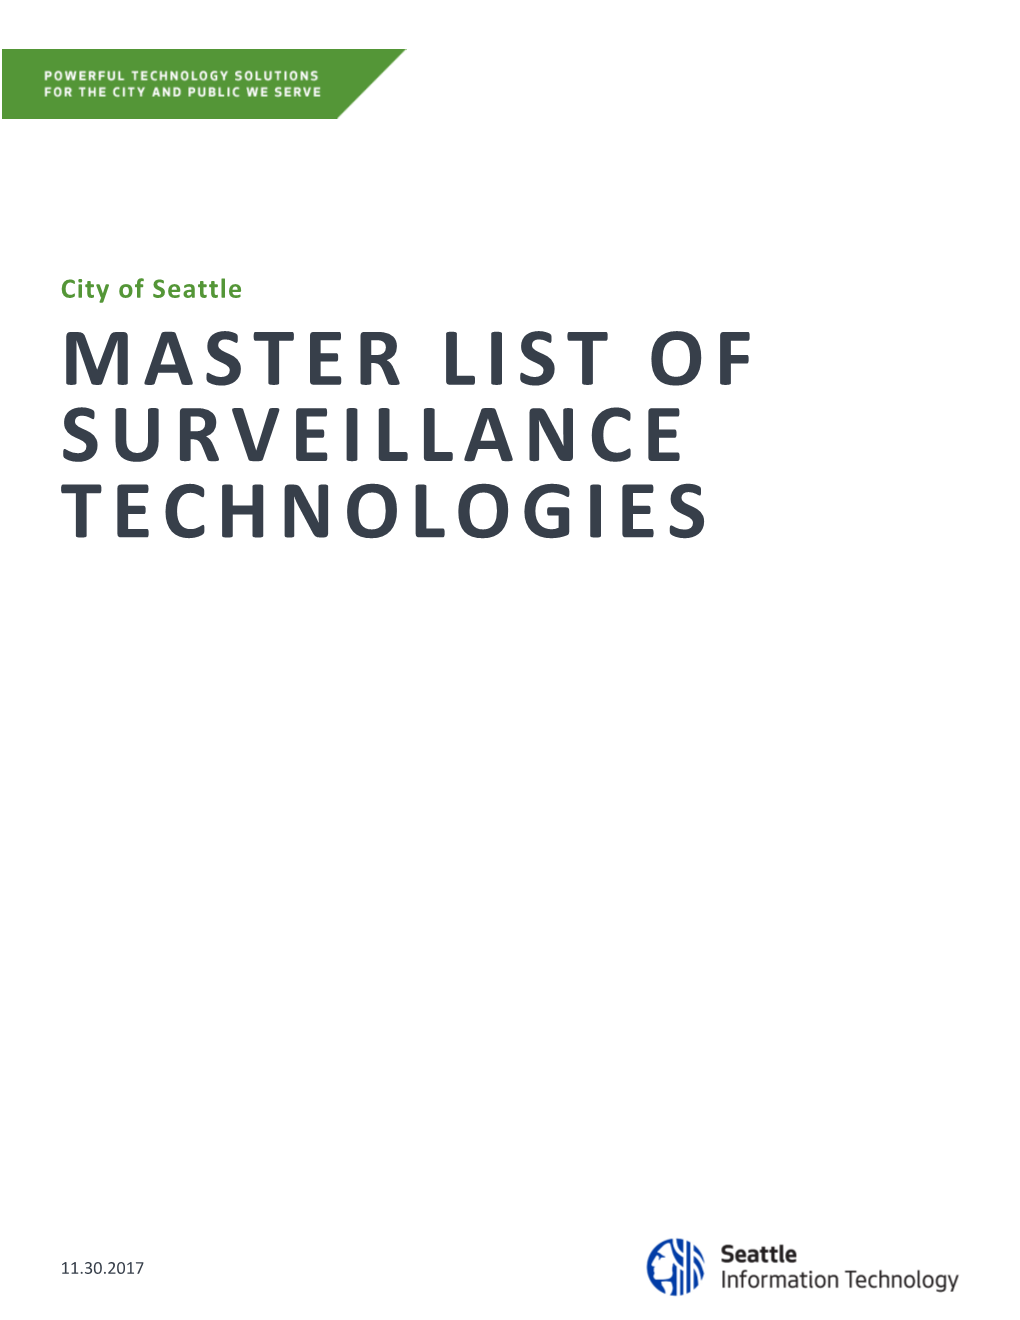 Master List of Surveillance Technologies